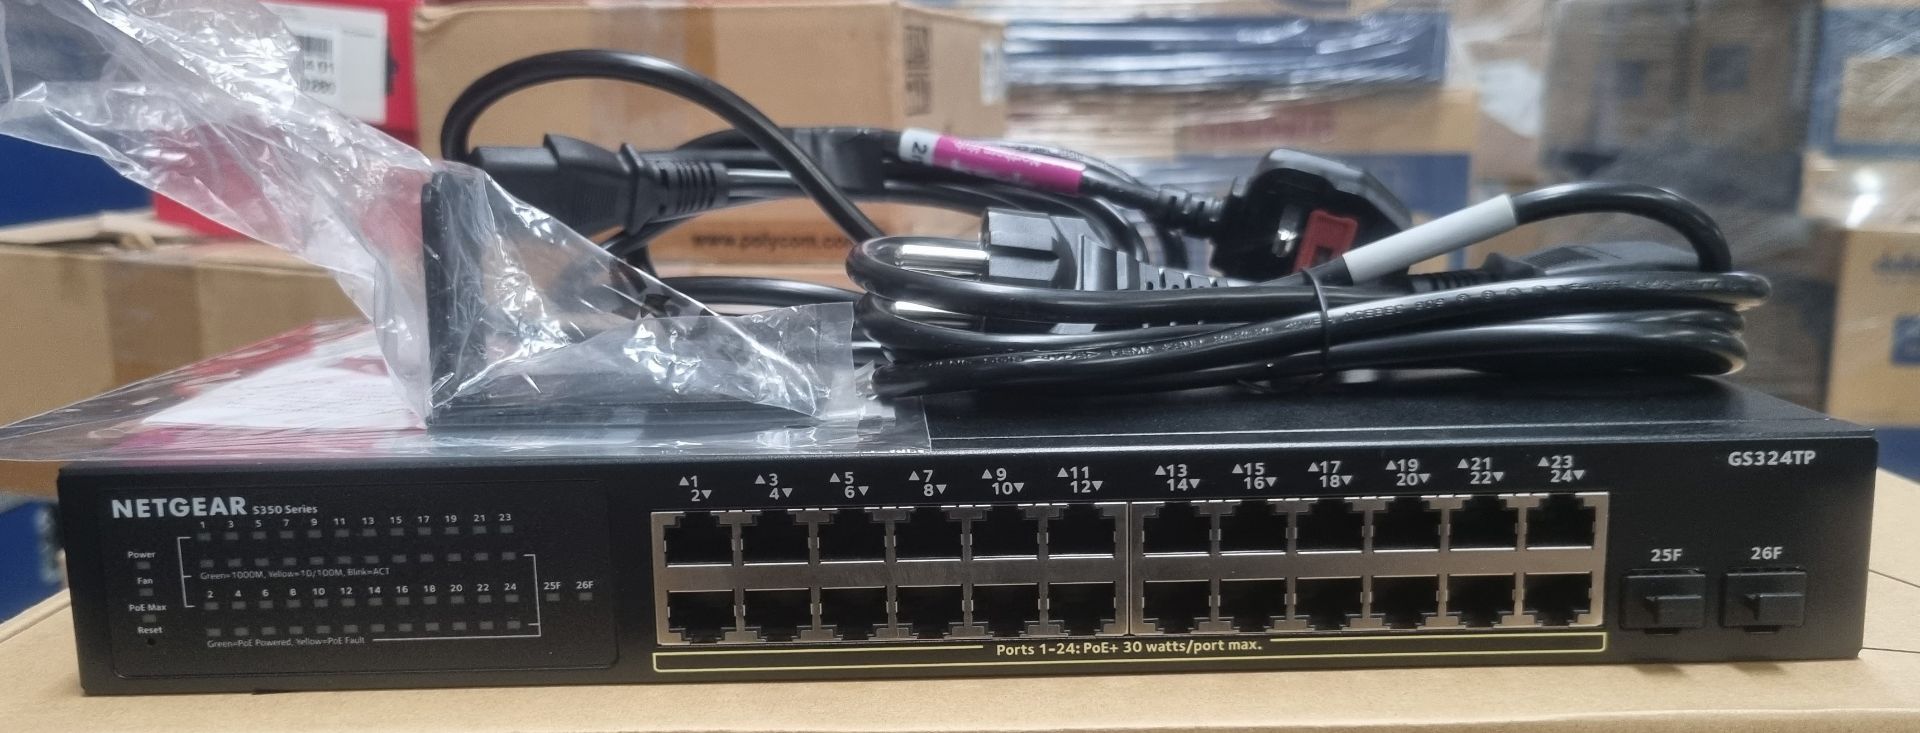 5 x NETGEAR GS324TP 24 Port Network Switch - Image 2 of 4